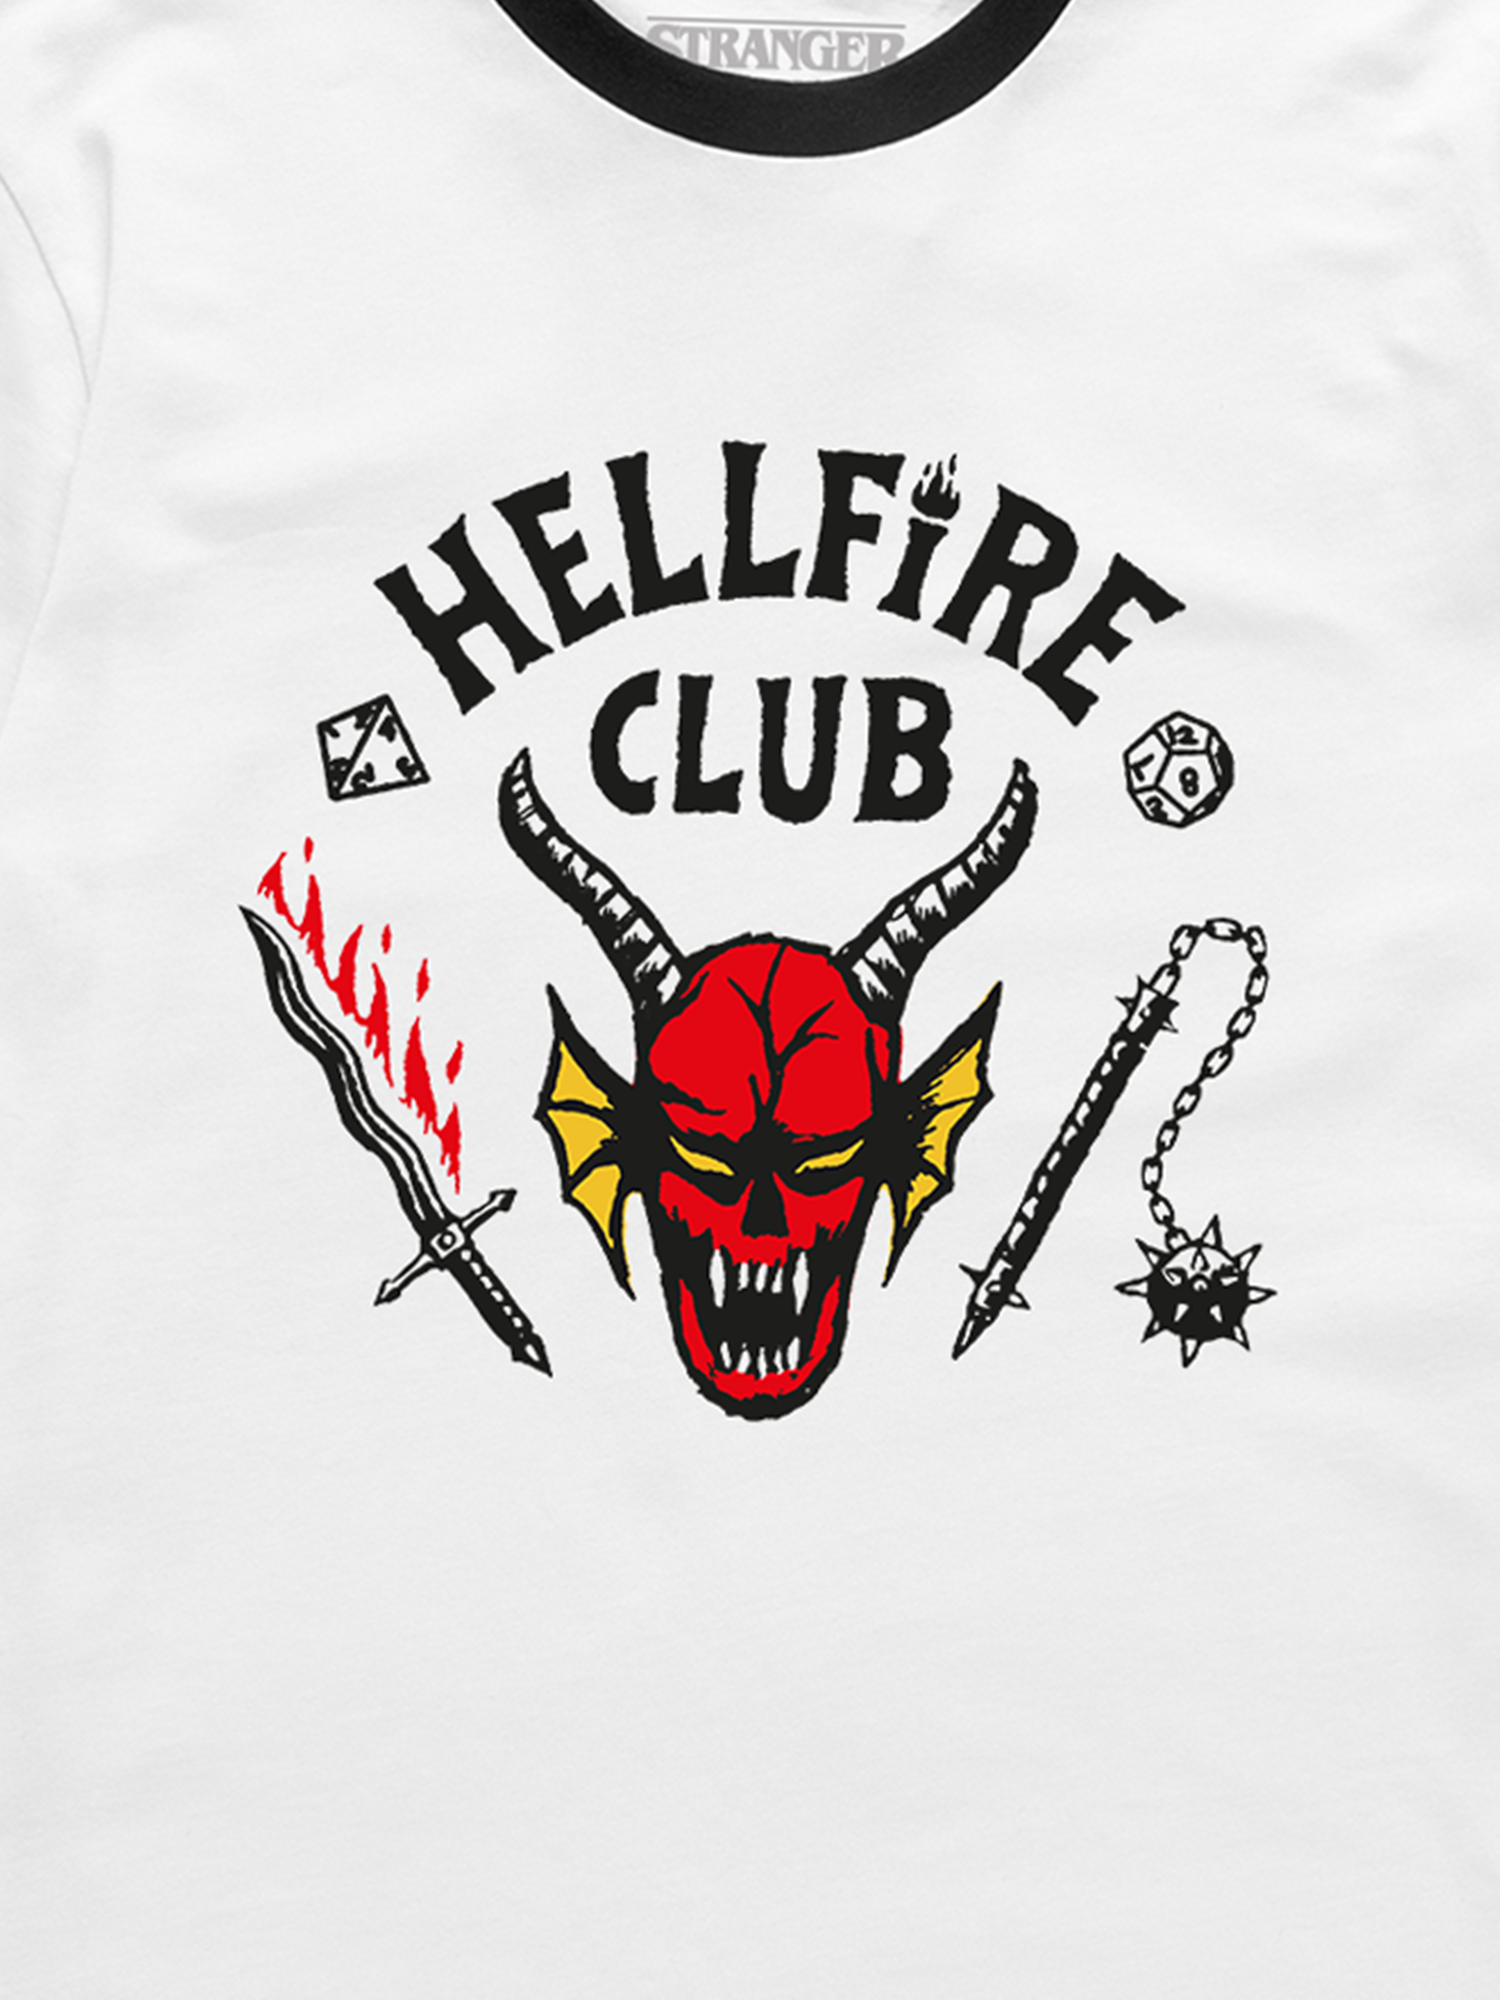 Hellfire Club T-Shirt - Stranger Things 4 | Netflix Shop